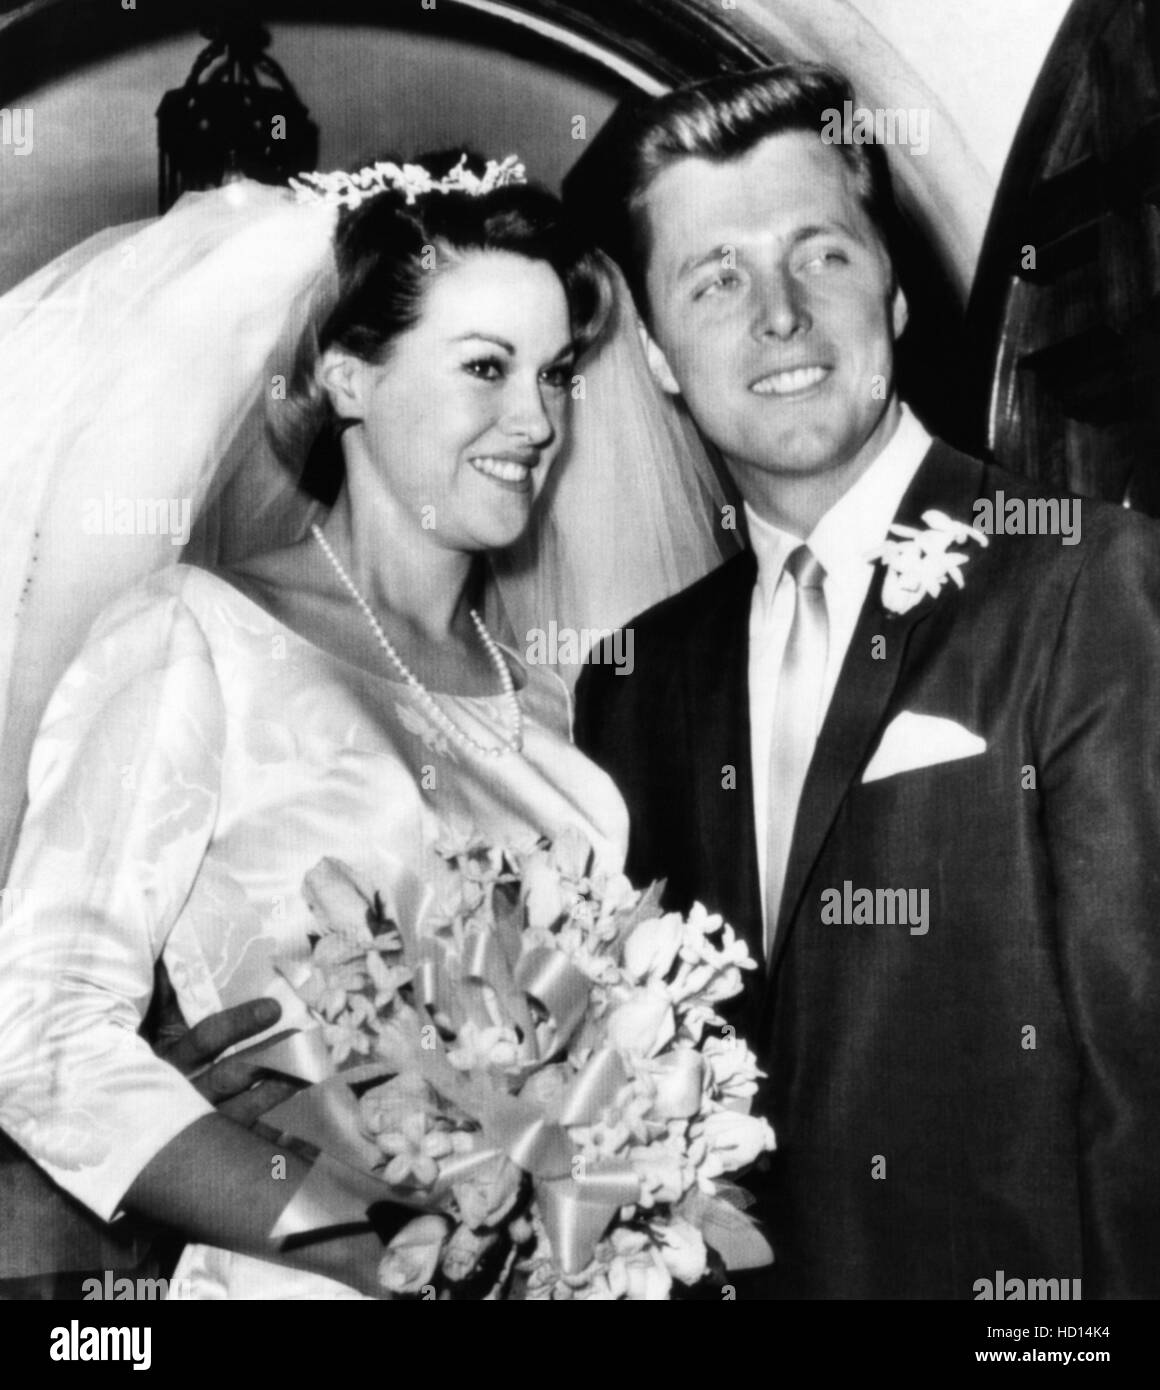 Wedding of Asa Maynor (left) and Edd Byrnes, All Saints Episcopal Church, Hollywood, March 25, 1962 Stock Photo